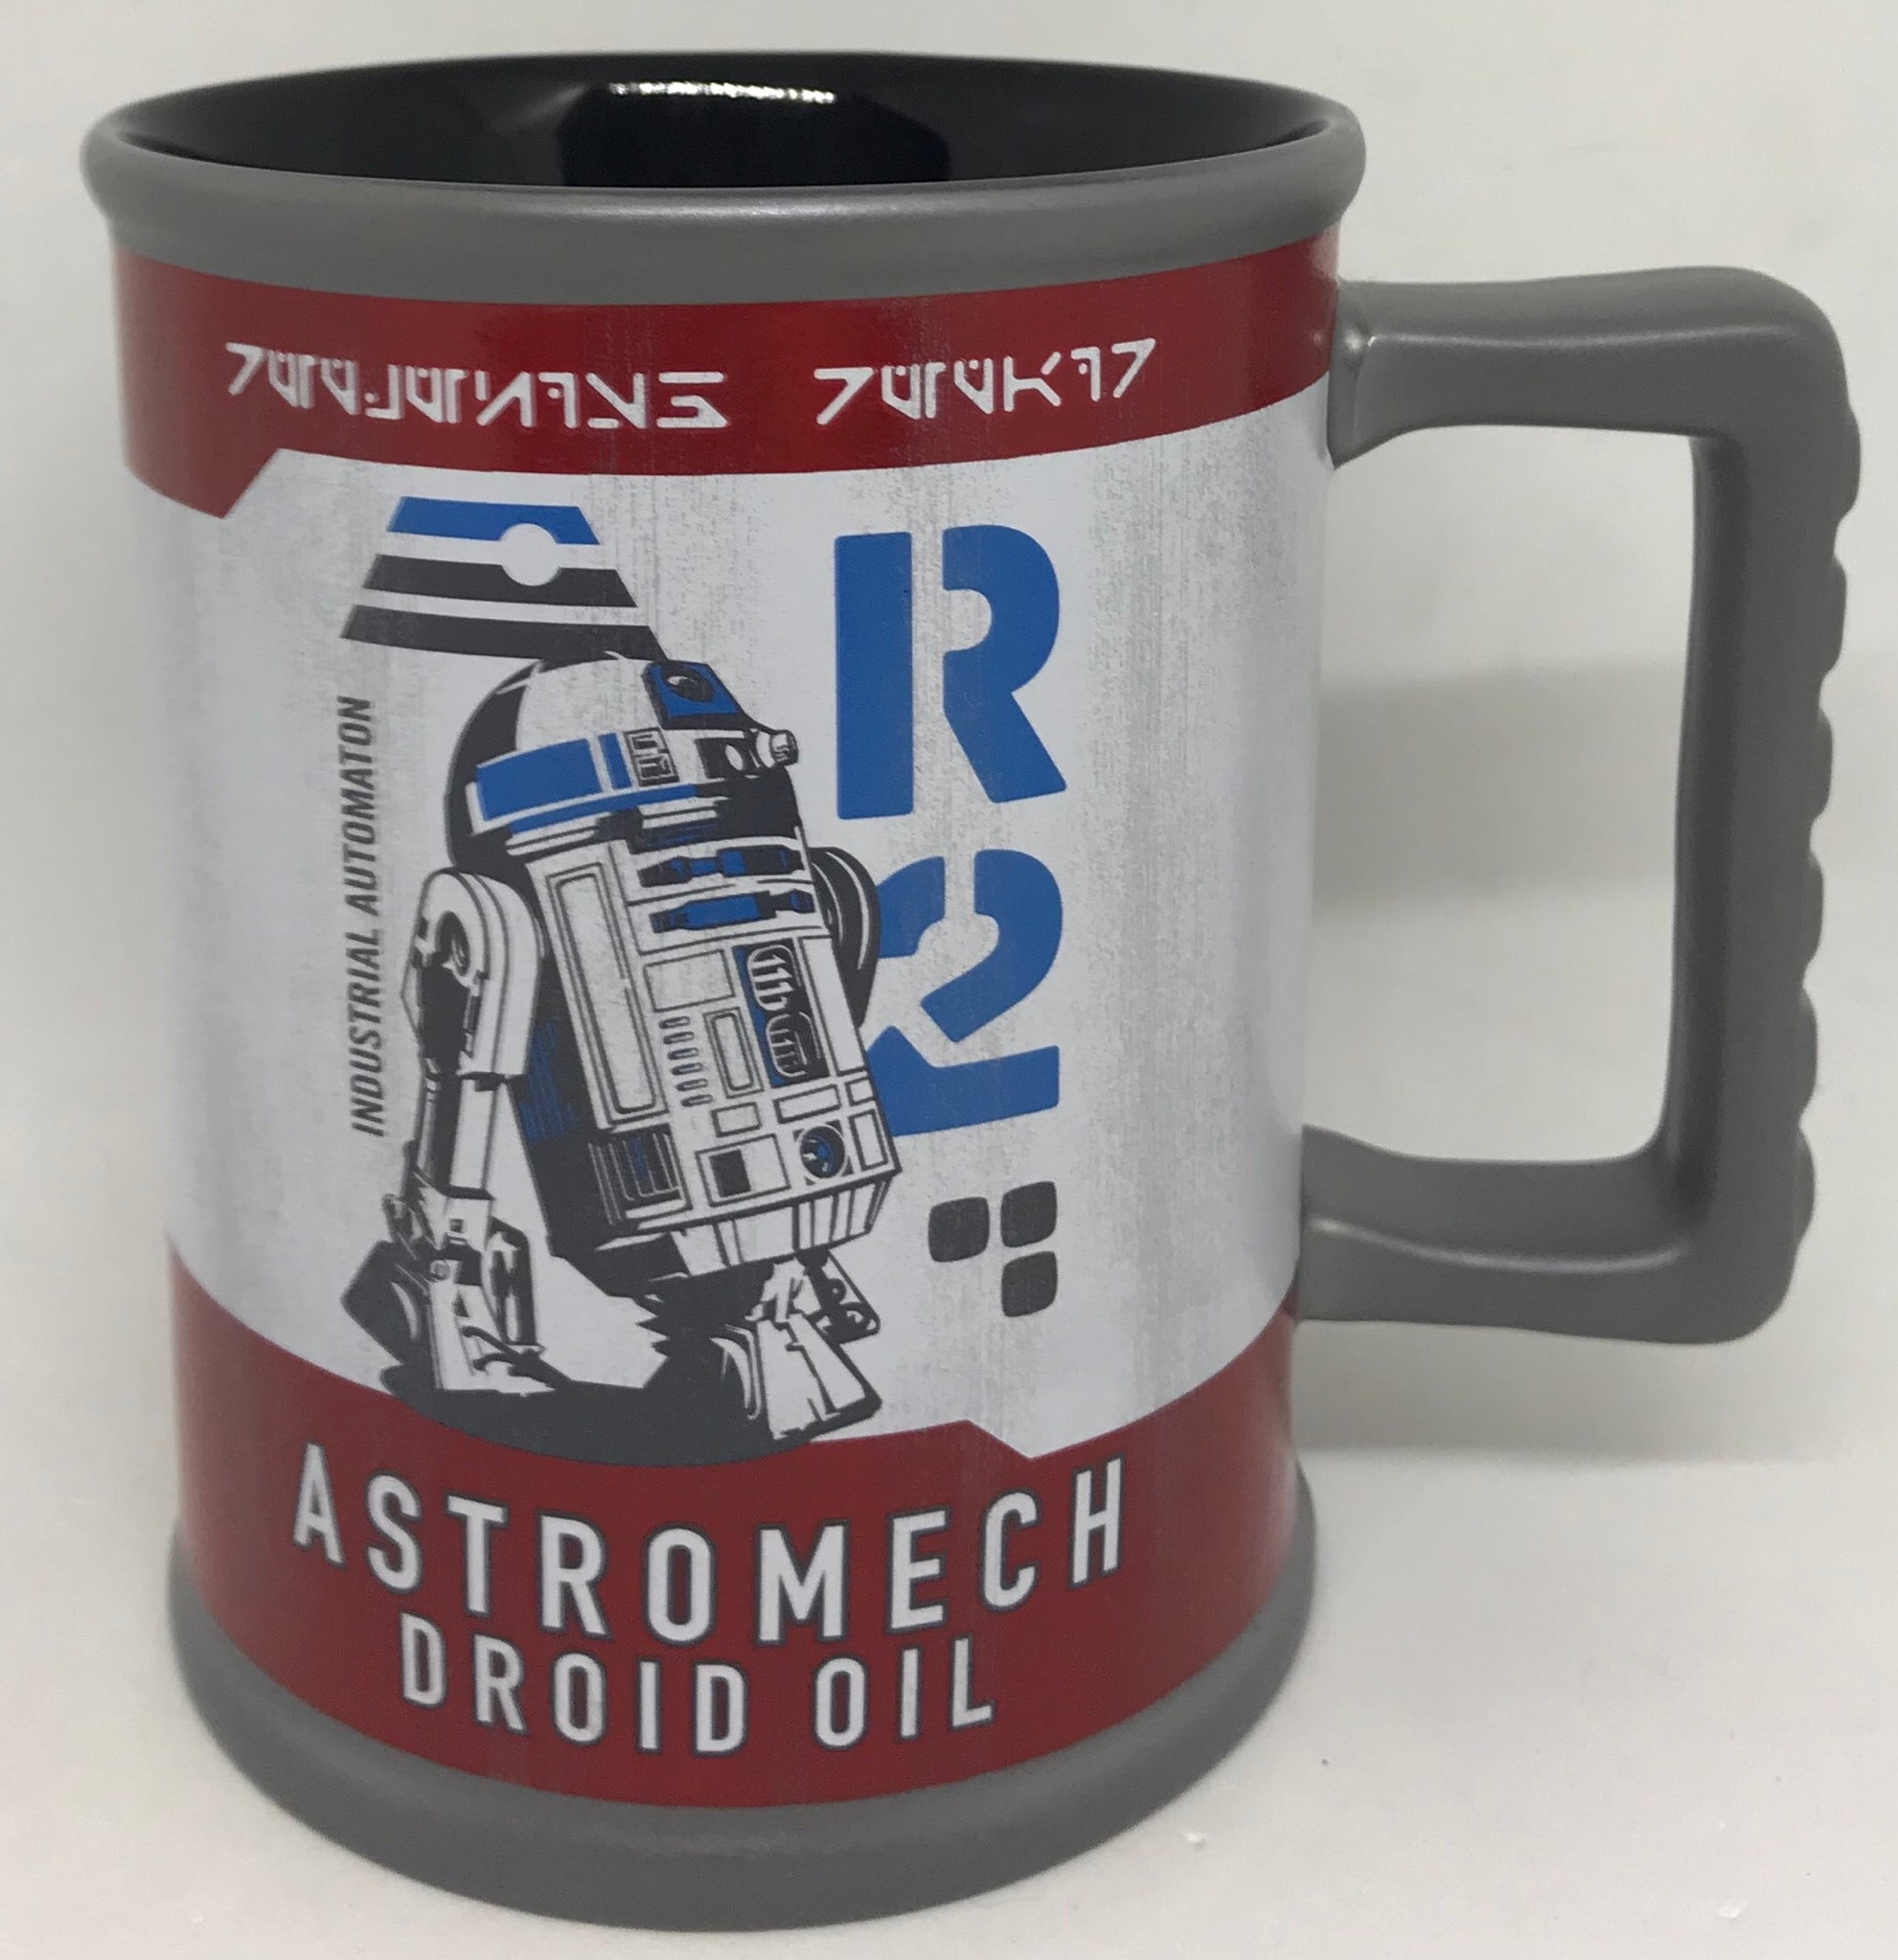 Star Wars The Droids-Red 11 oz. Mug